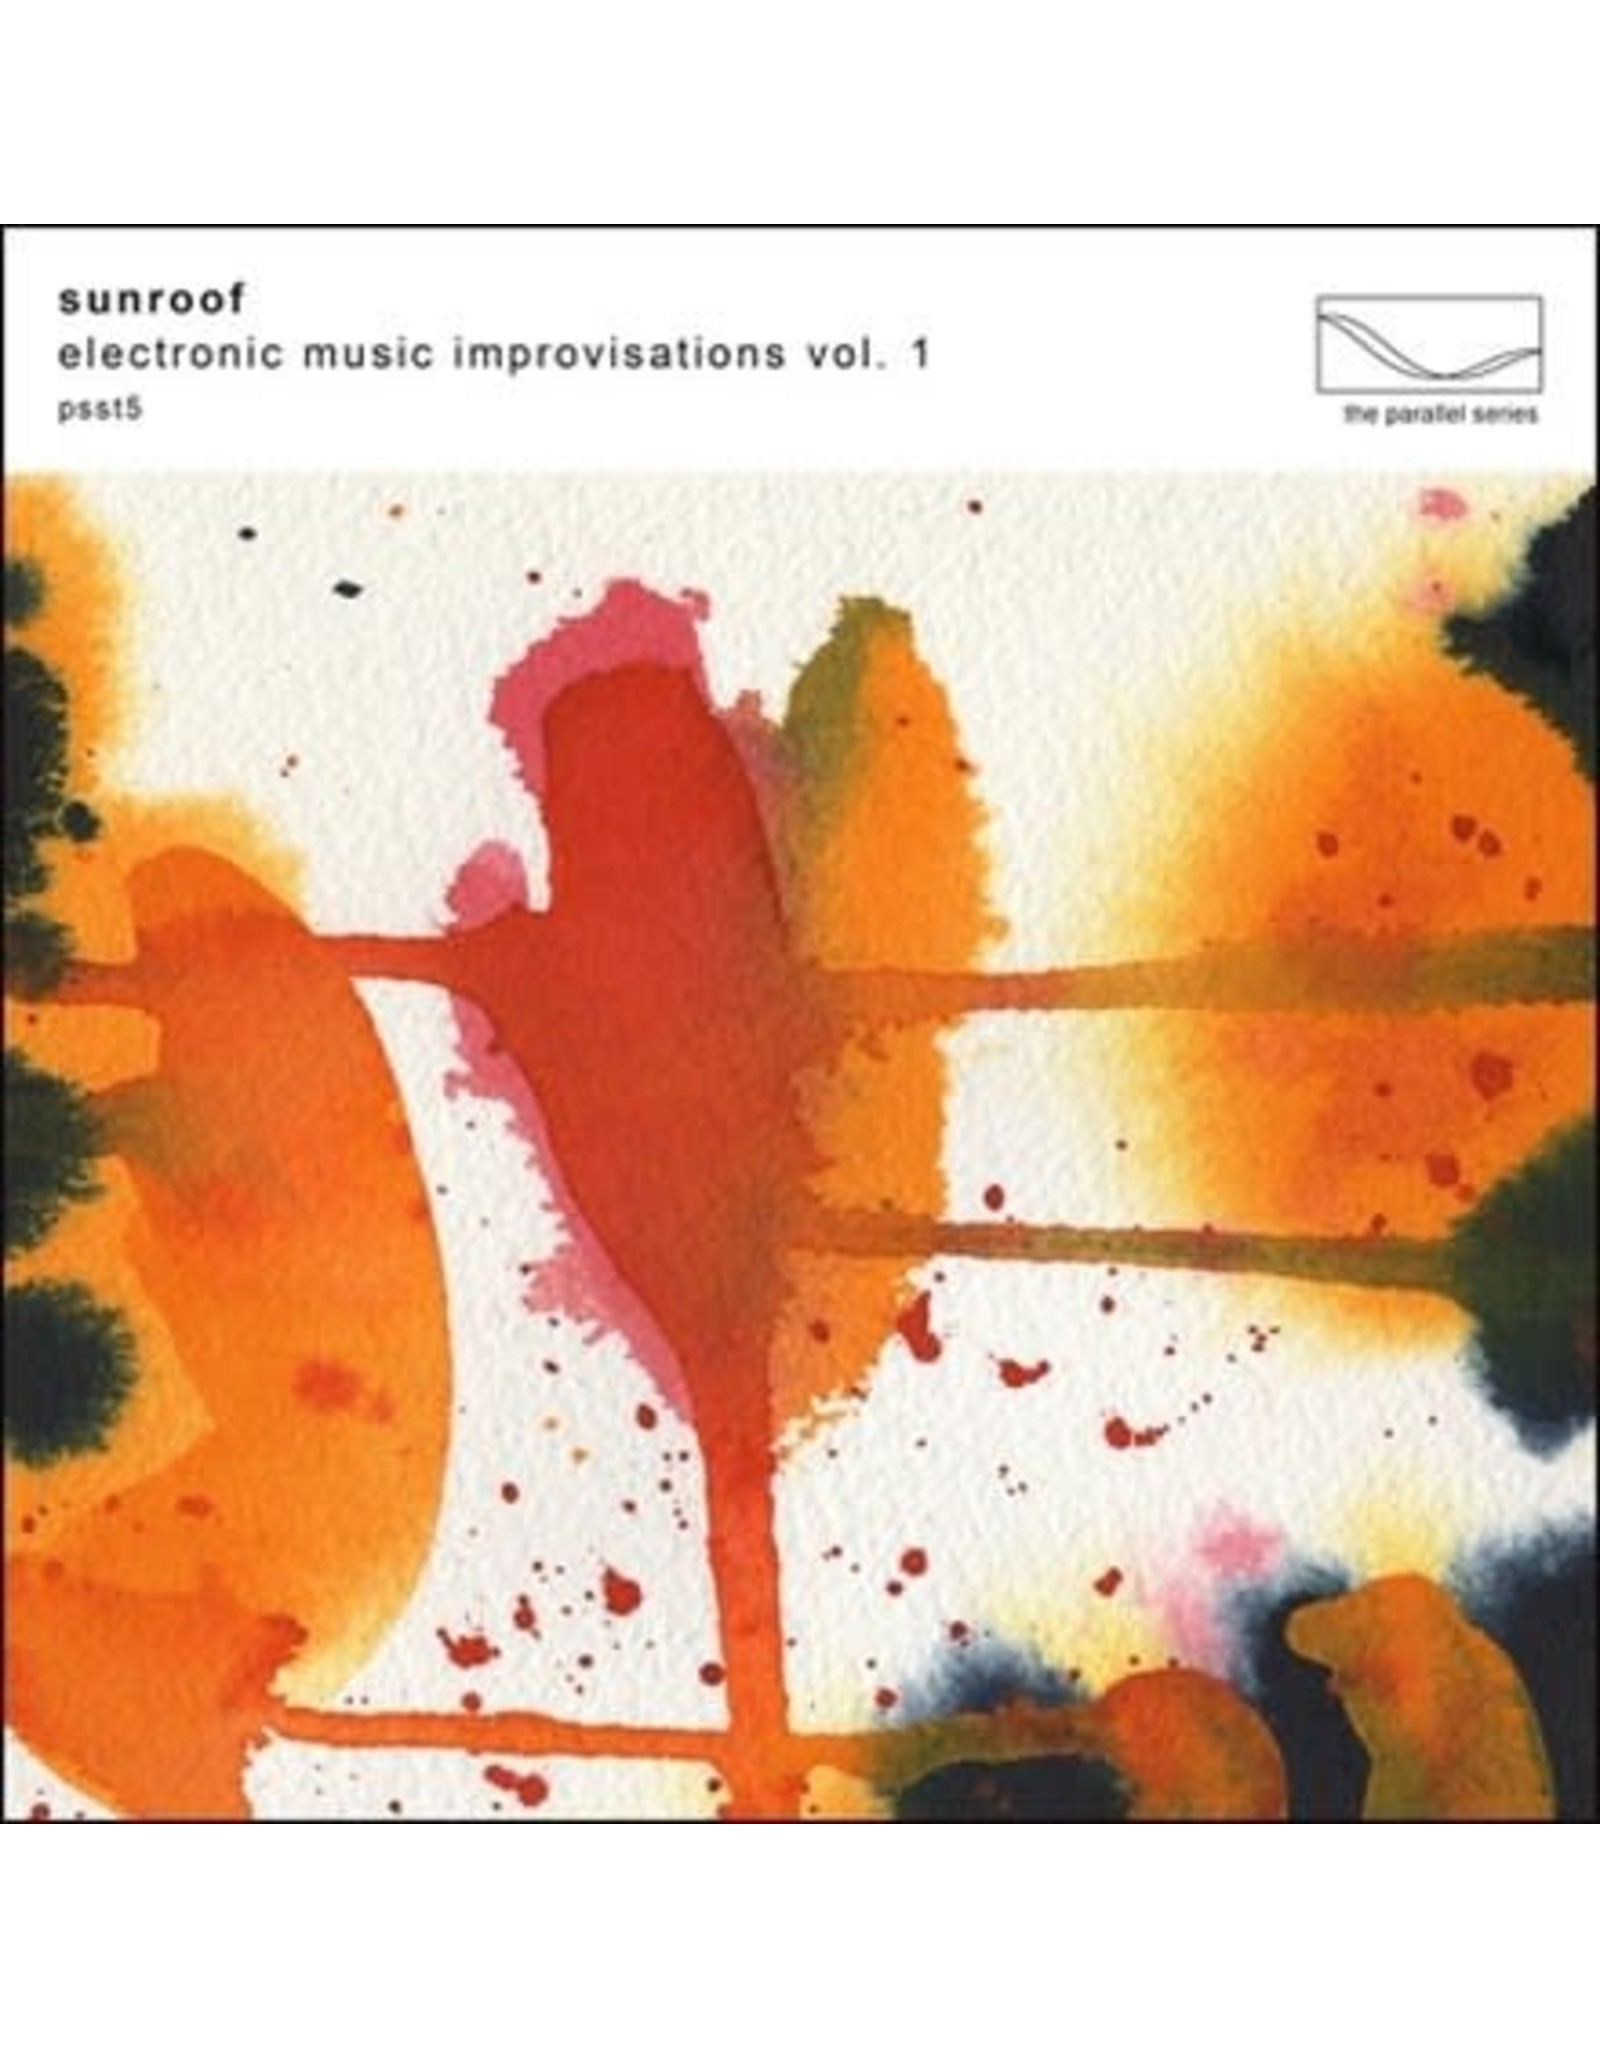 Parallel Series Sunroof: Electronic Music Improvisation, Vol. 1 LP